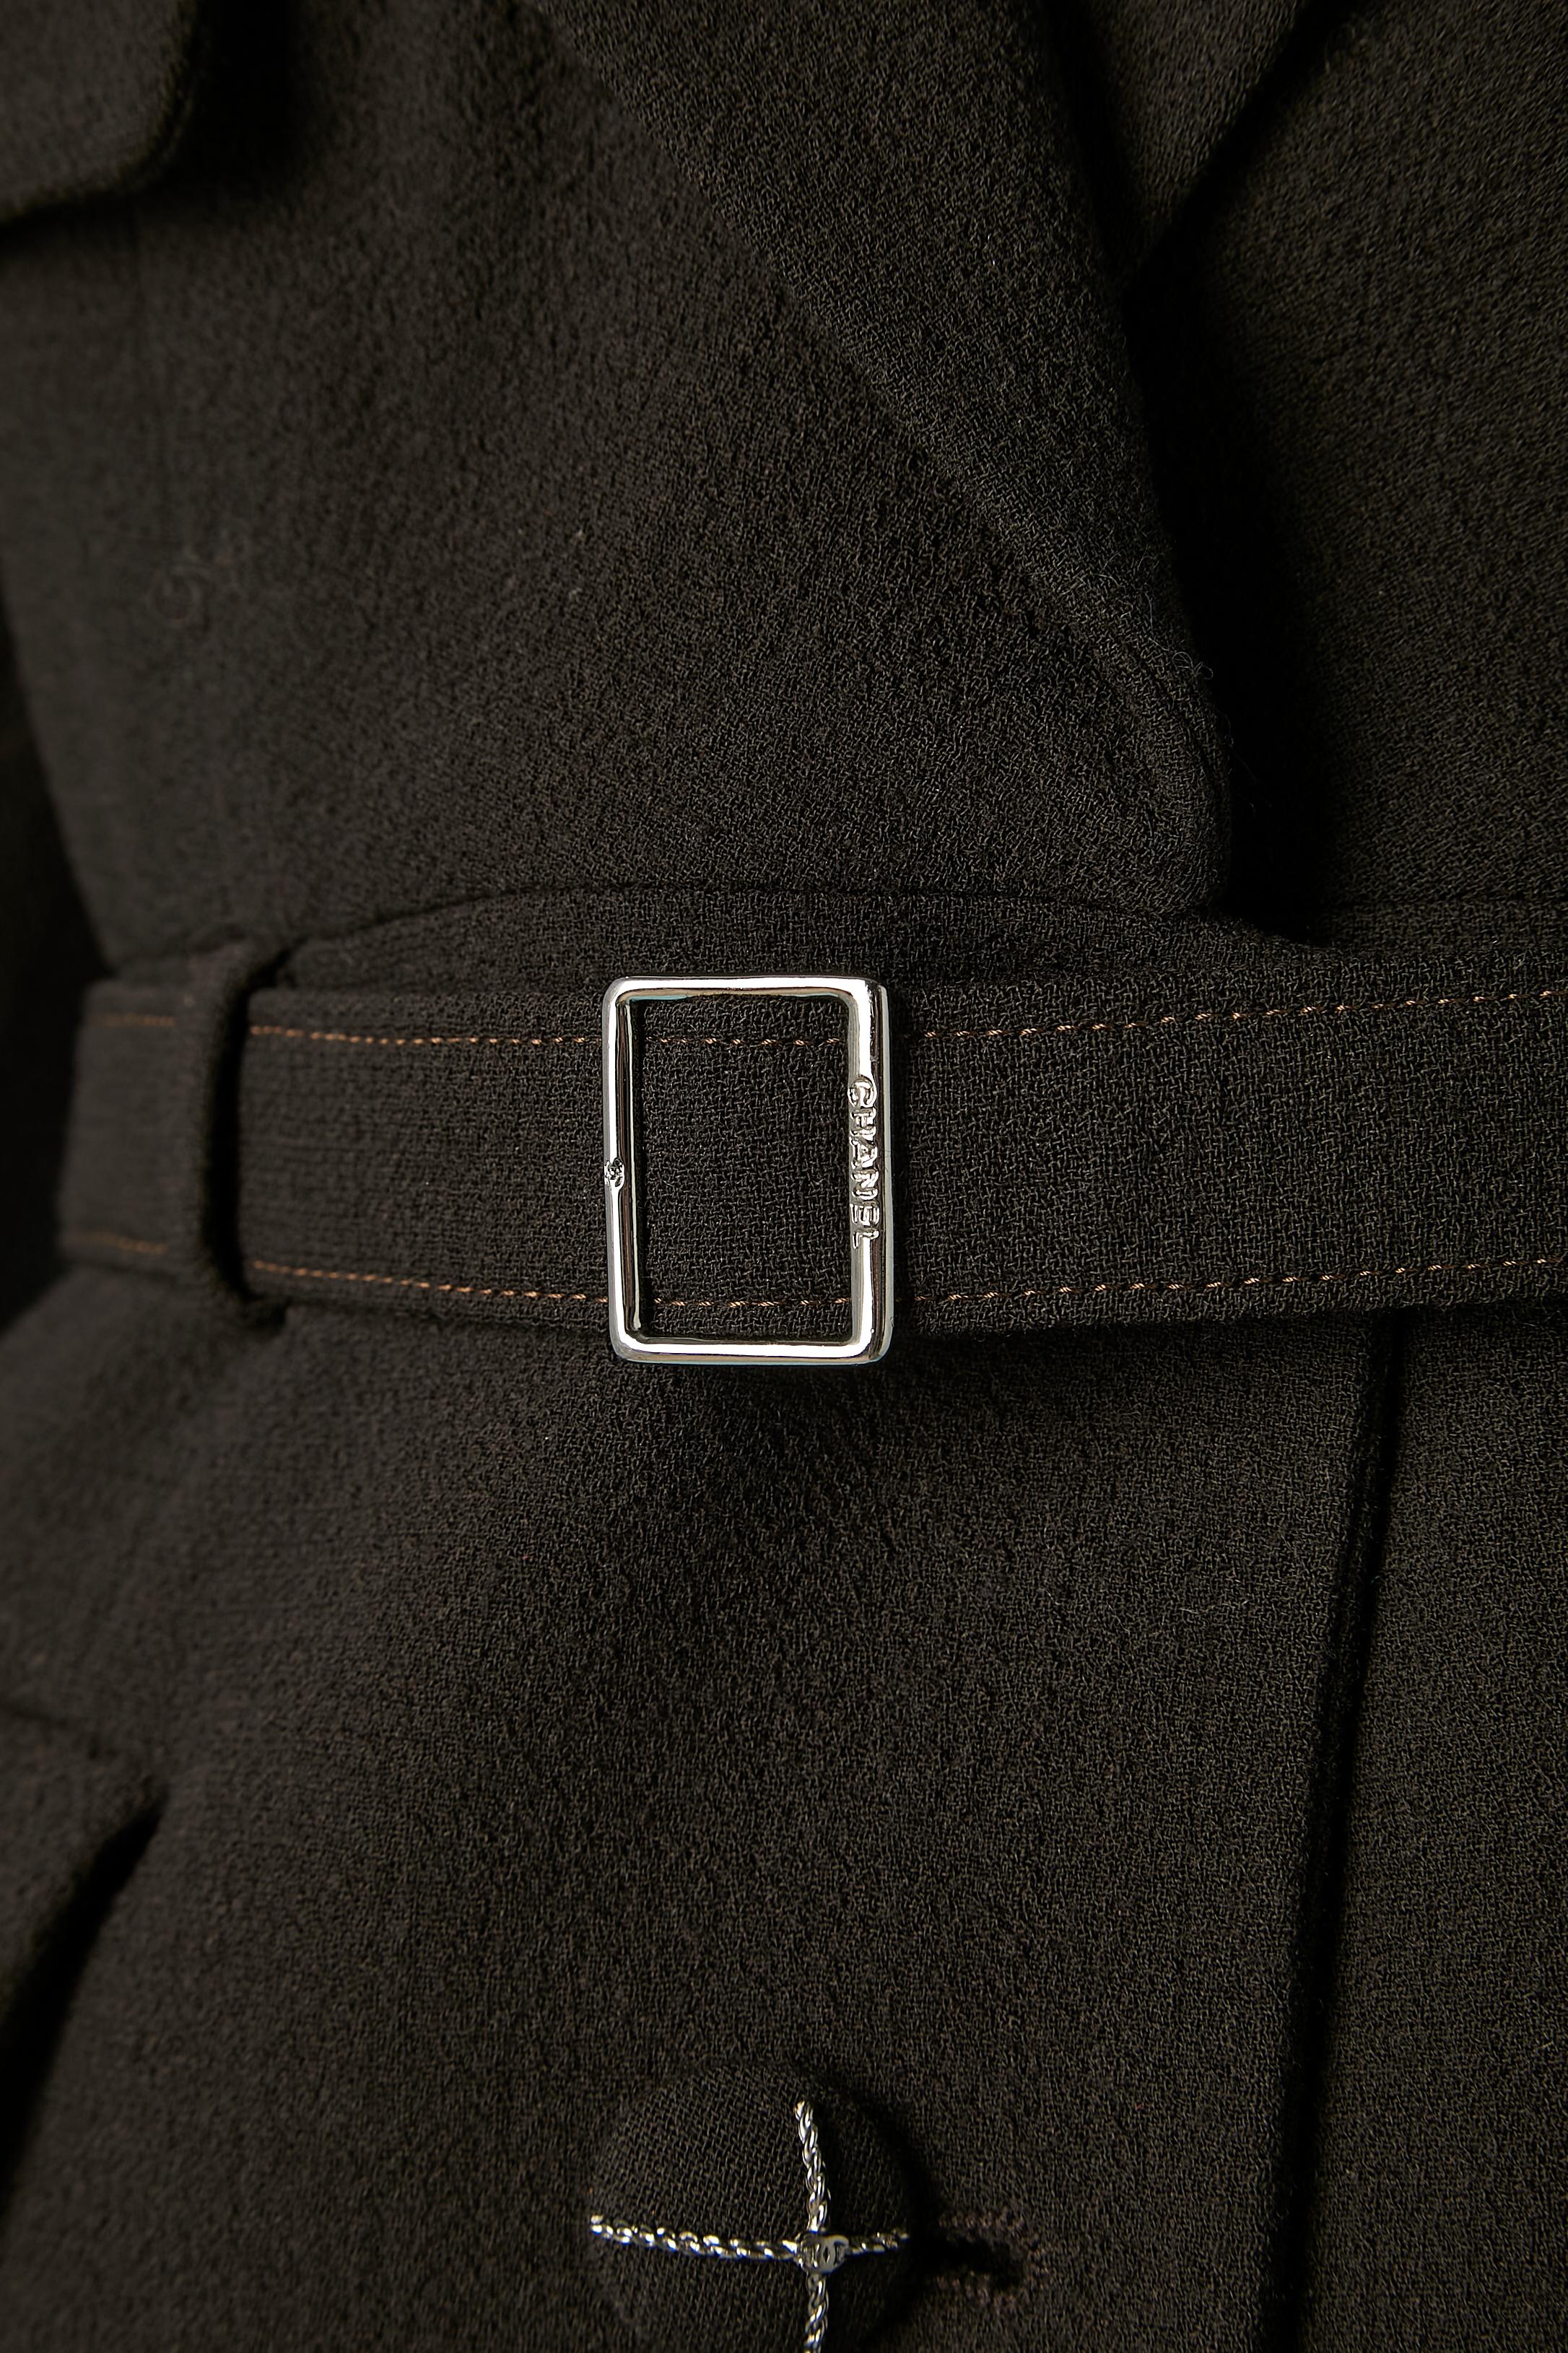 Dark brown wool jacket with silver metallic threads details on button CHANEL In Excellent Condition For Sale In Saint-Ouen-Sur-Seine, FR